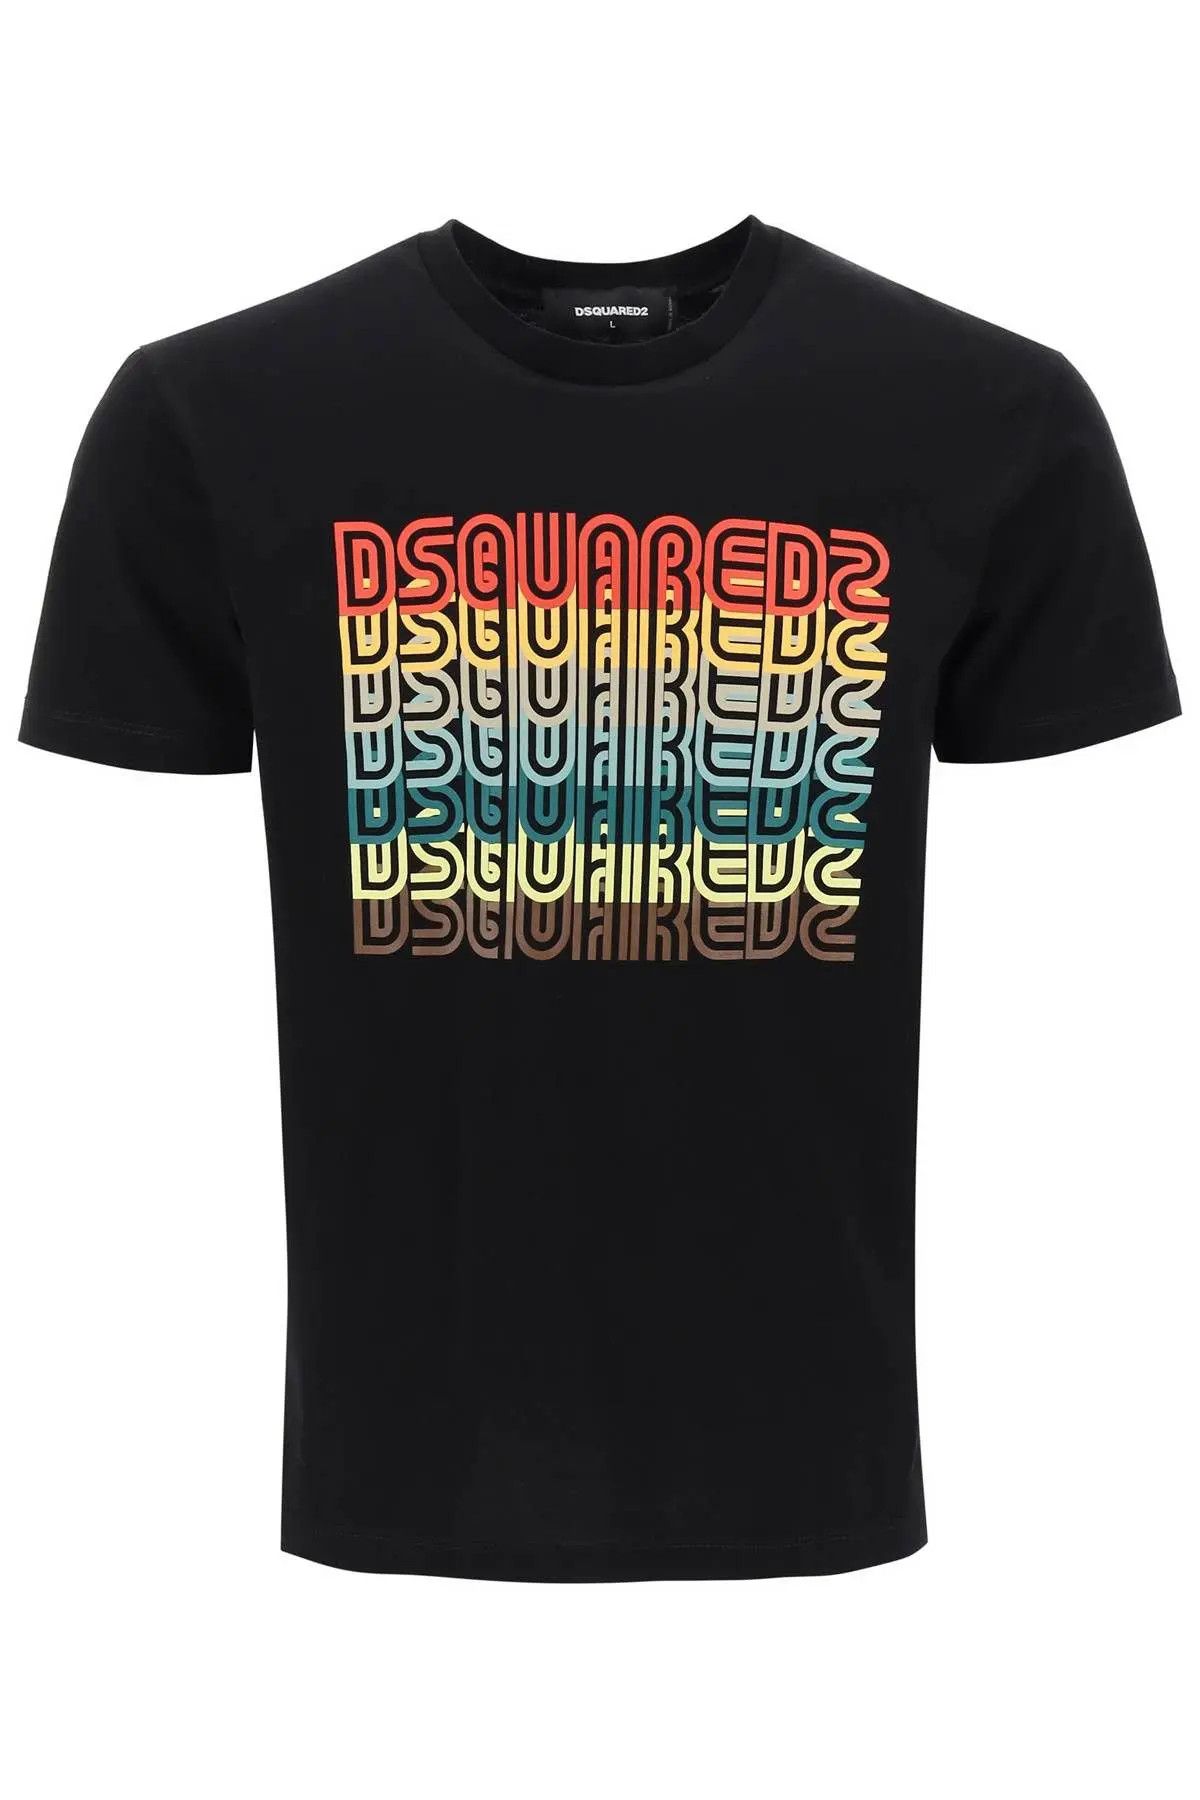 Dsquared2 o1s22i1n1023 Skater Fit T-Shirt in Black | Grailed